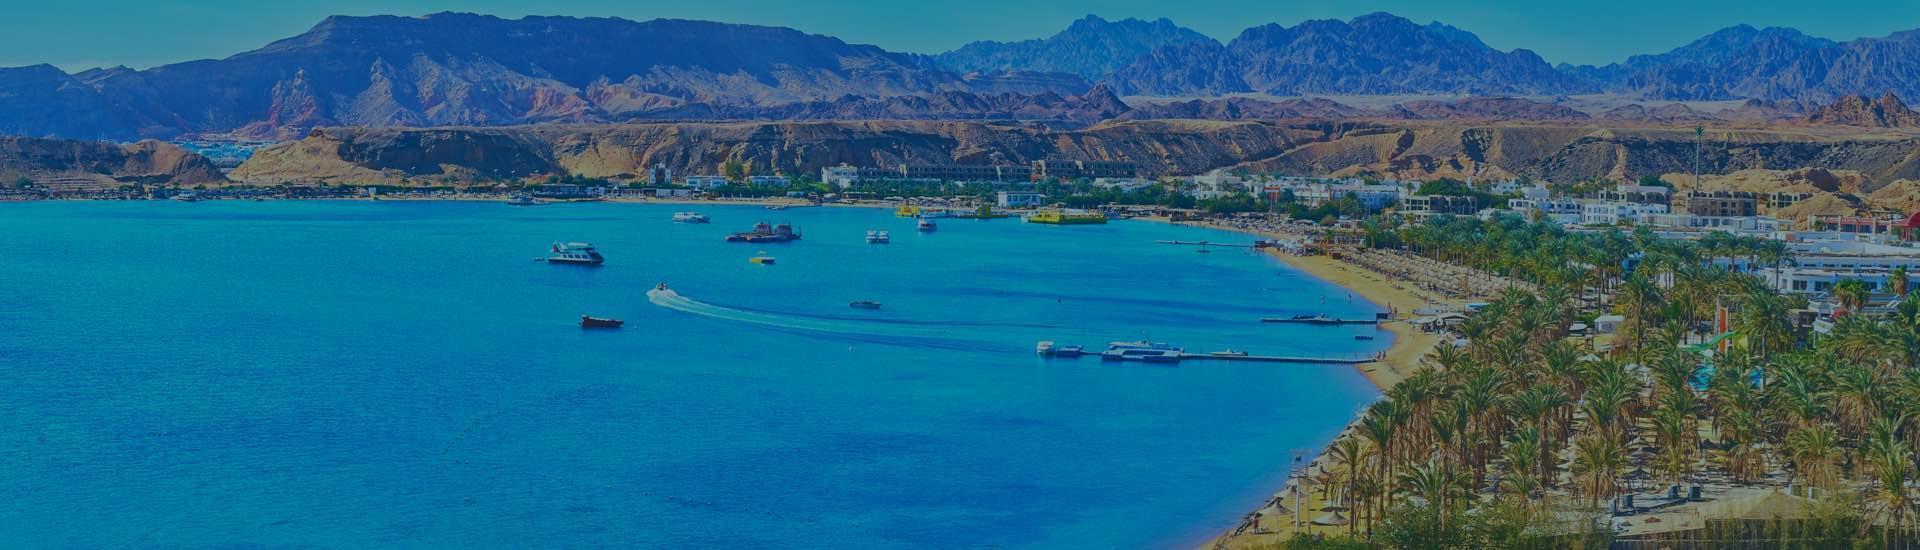 Book Cheap Flights to Sharm El Sheikh